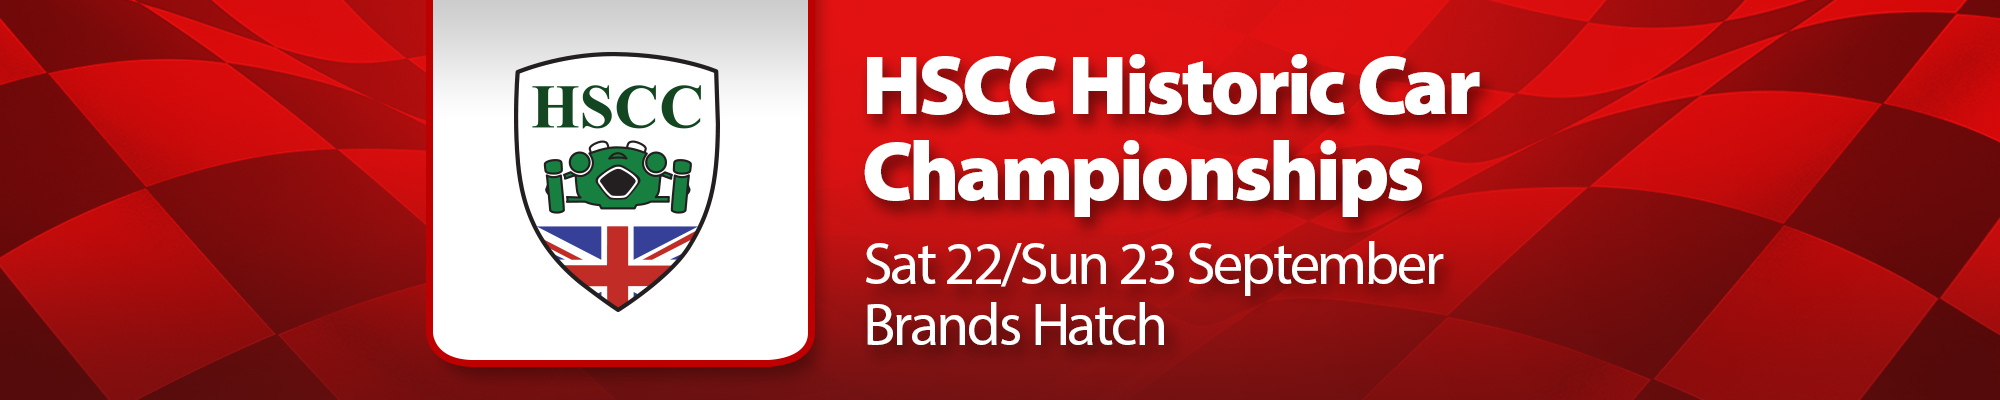 HSCC Historic Car Championships